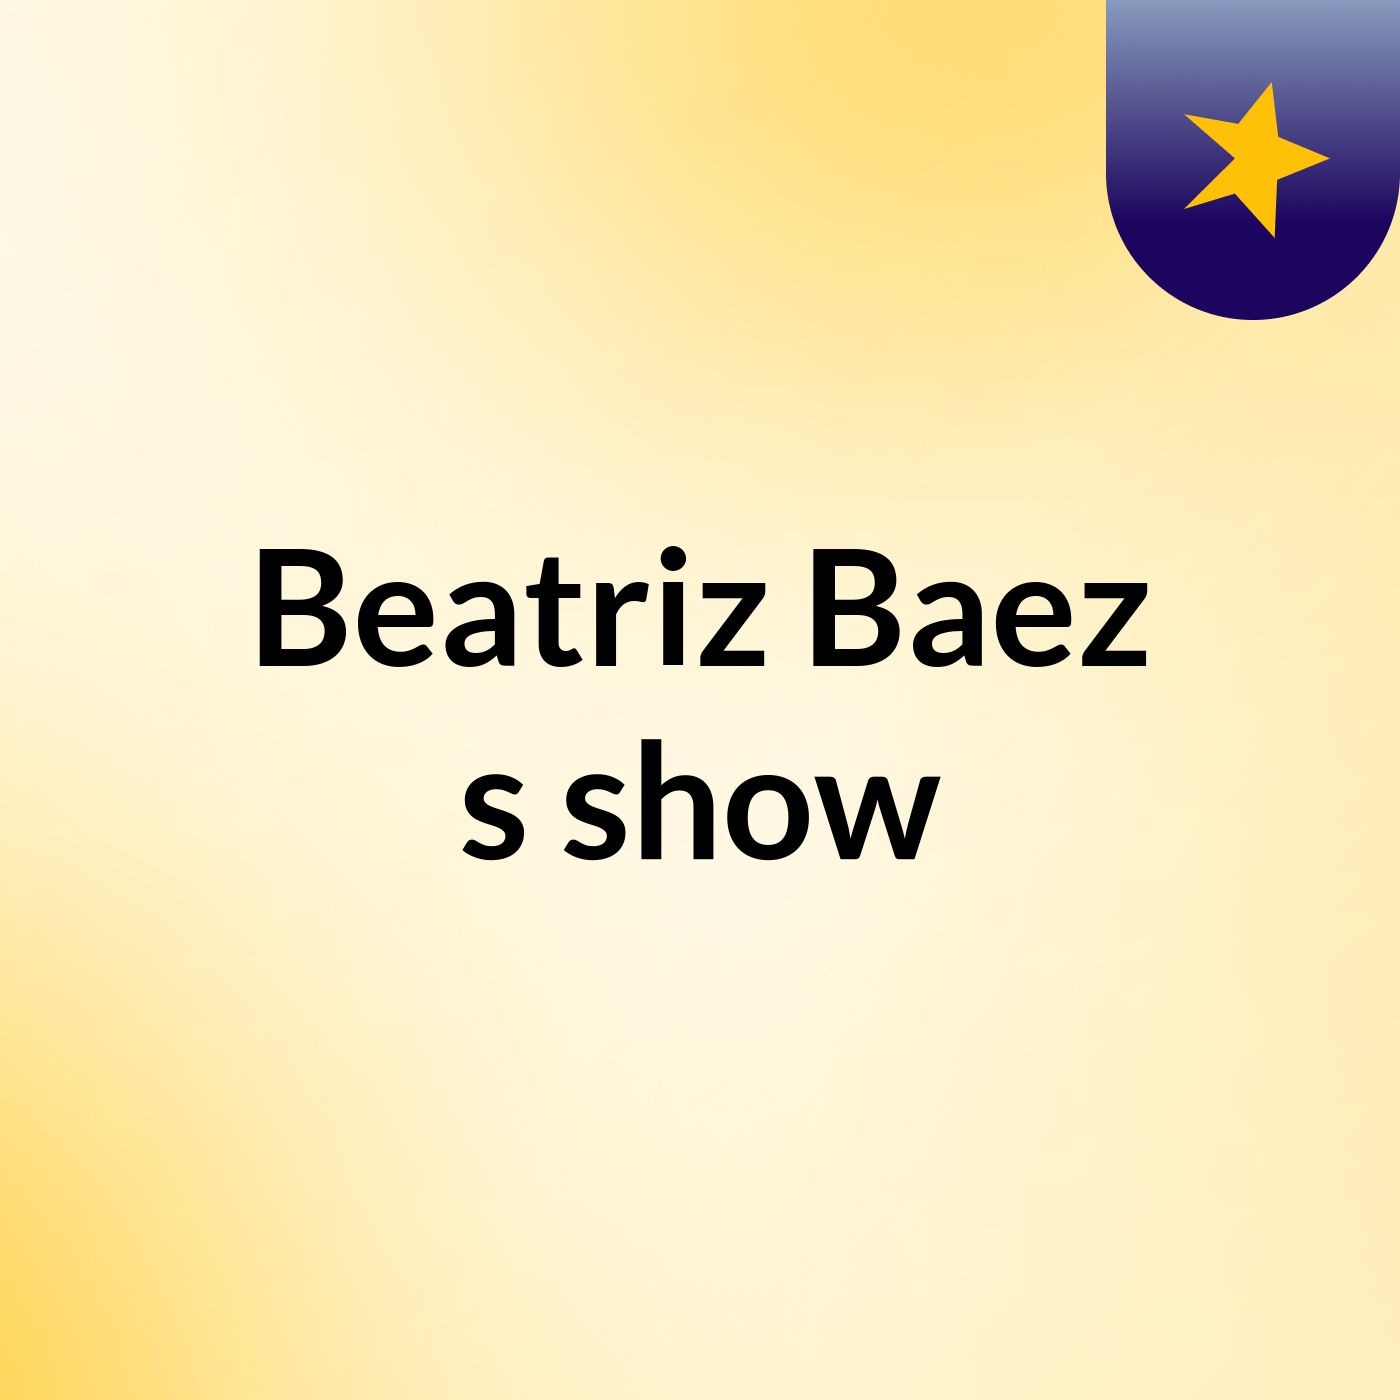 Beatriz Baez's show